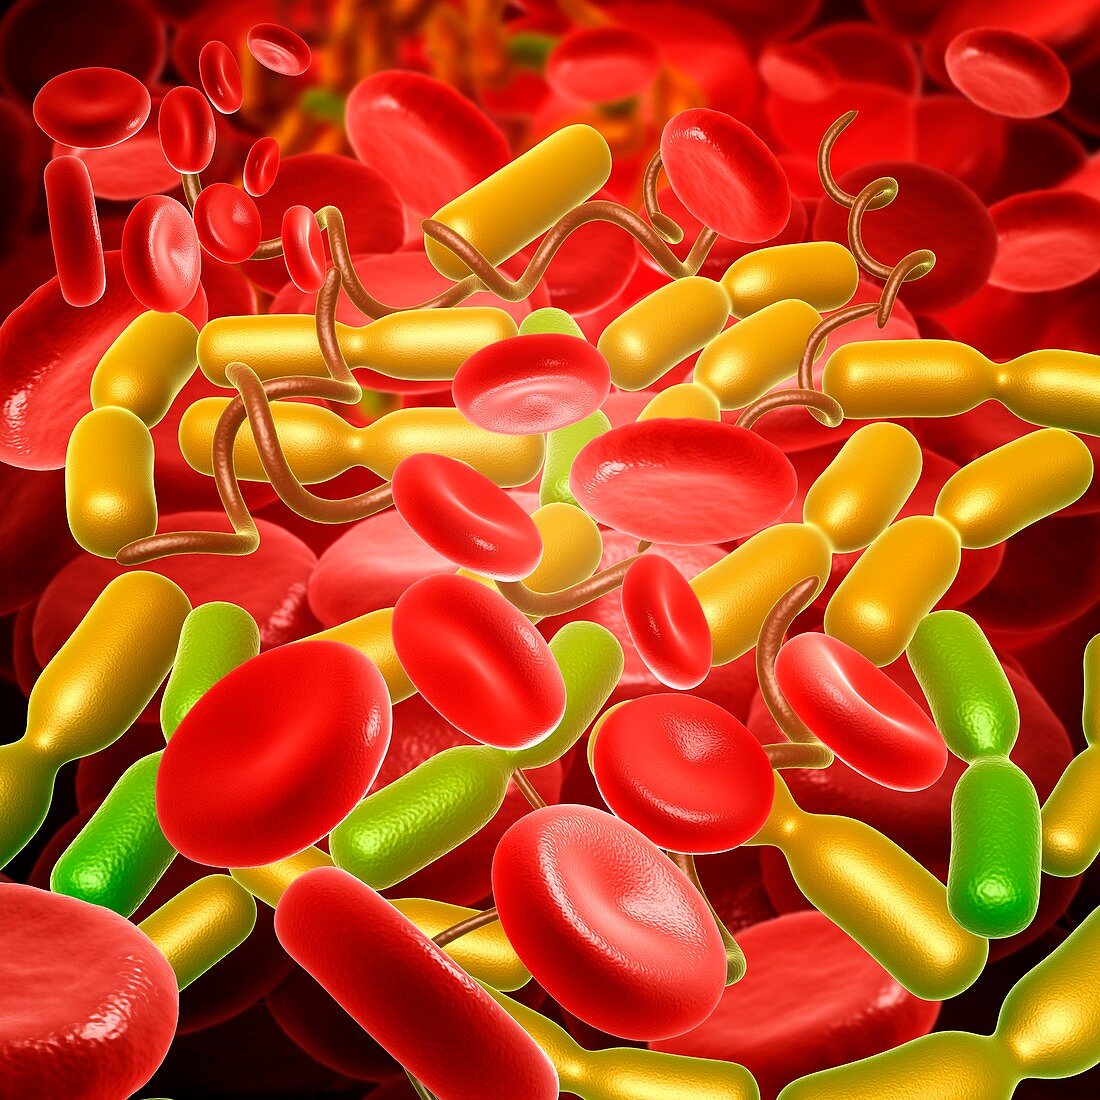 Yersinia pestis bacteria, illustration